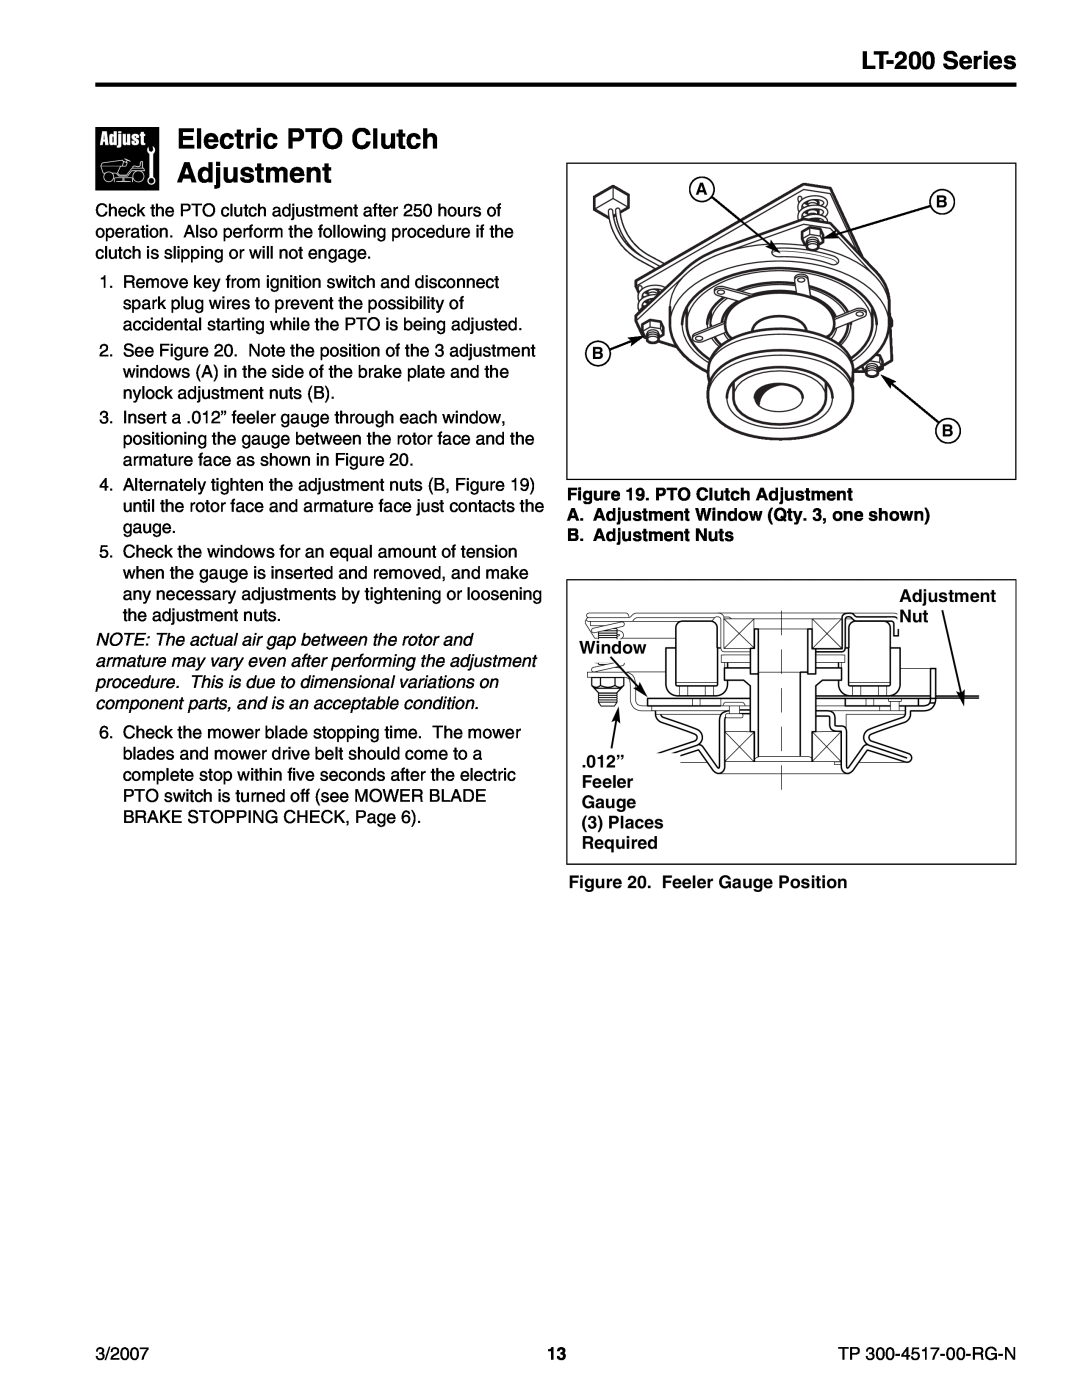 Briggs & Stratton manual Electric PTO Clutch Adjustment, LT-200 Series 